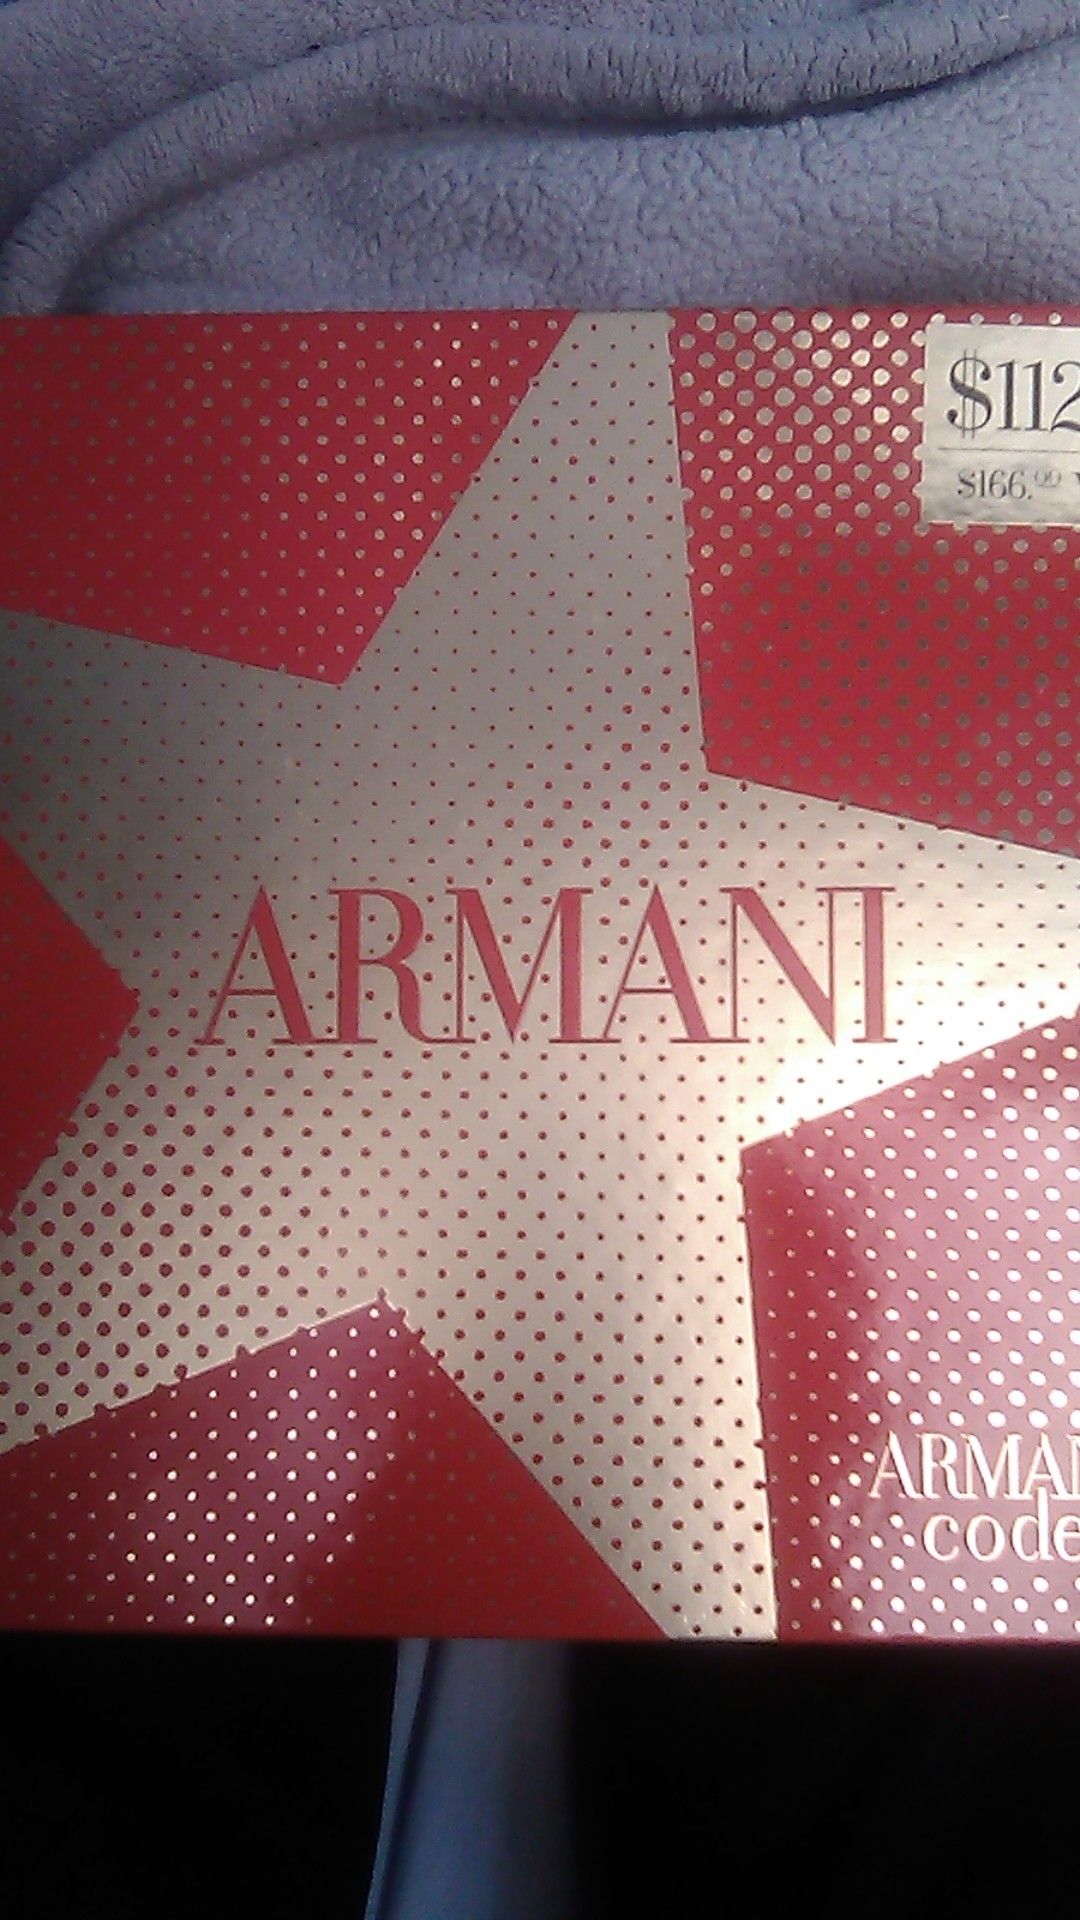 Armani code gift set